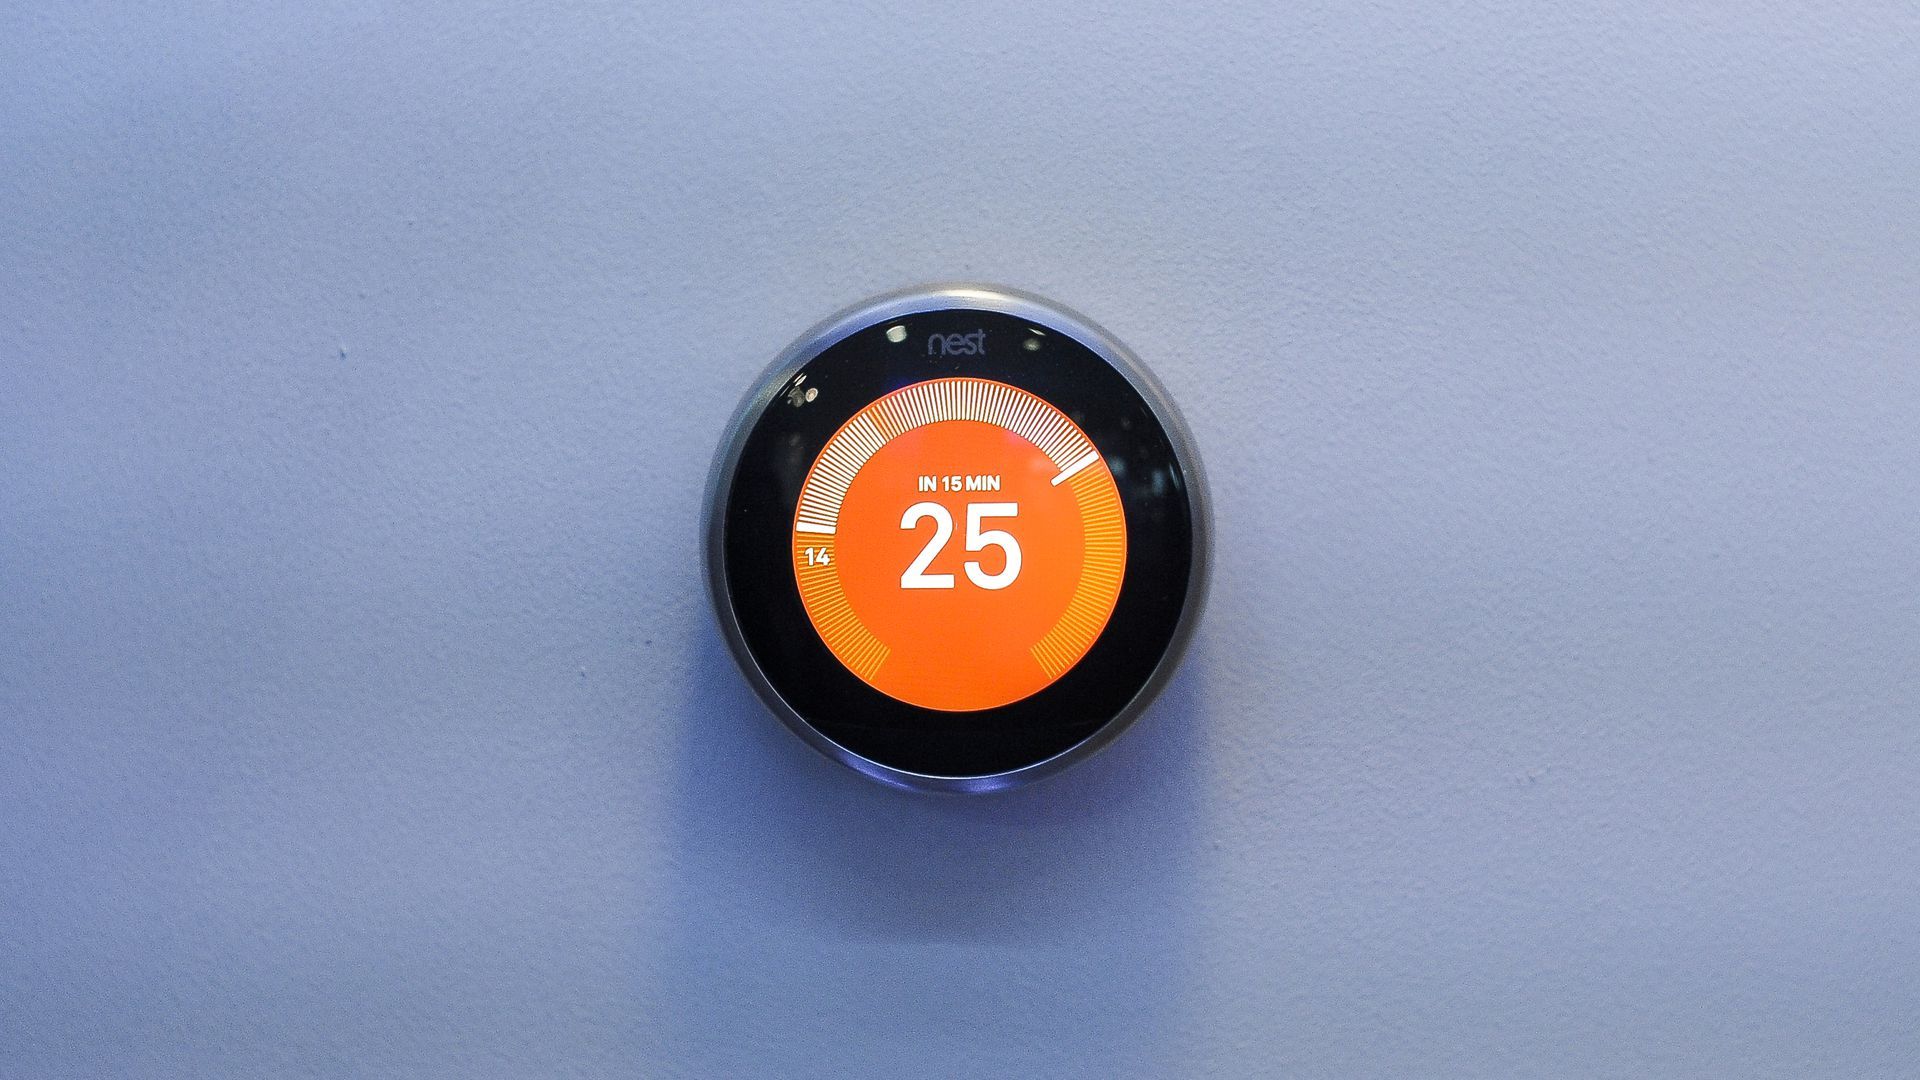 A Google Next thermostat